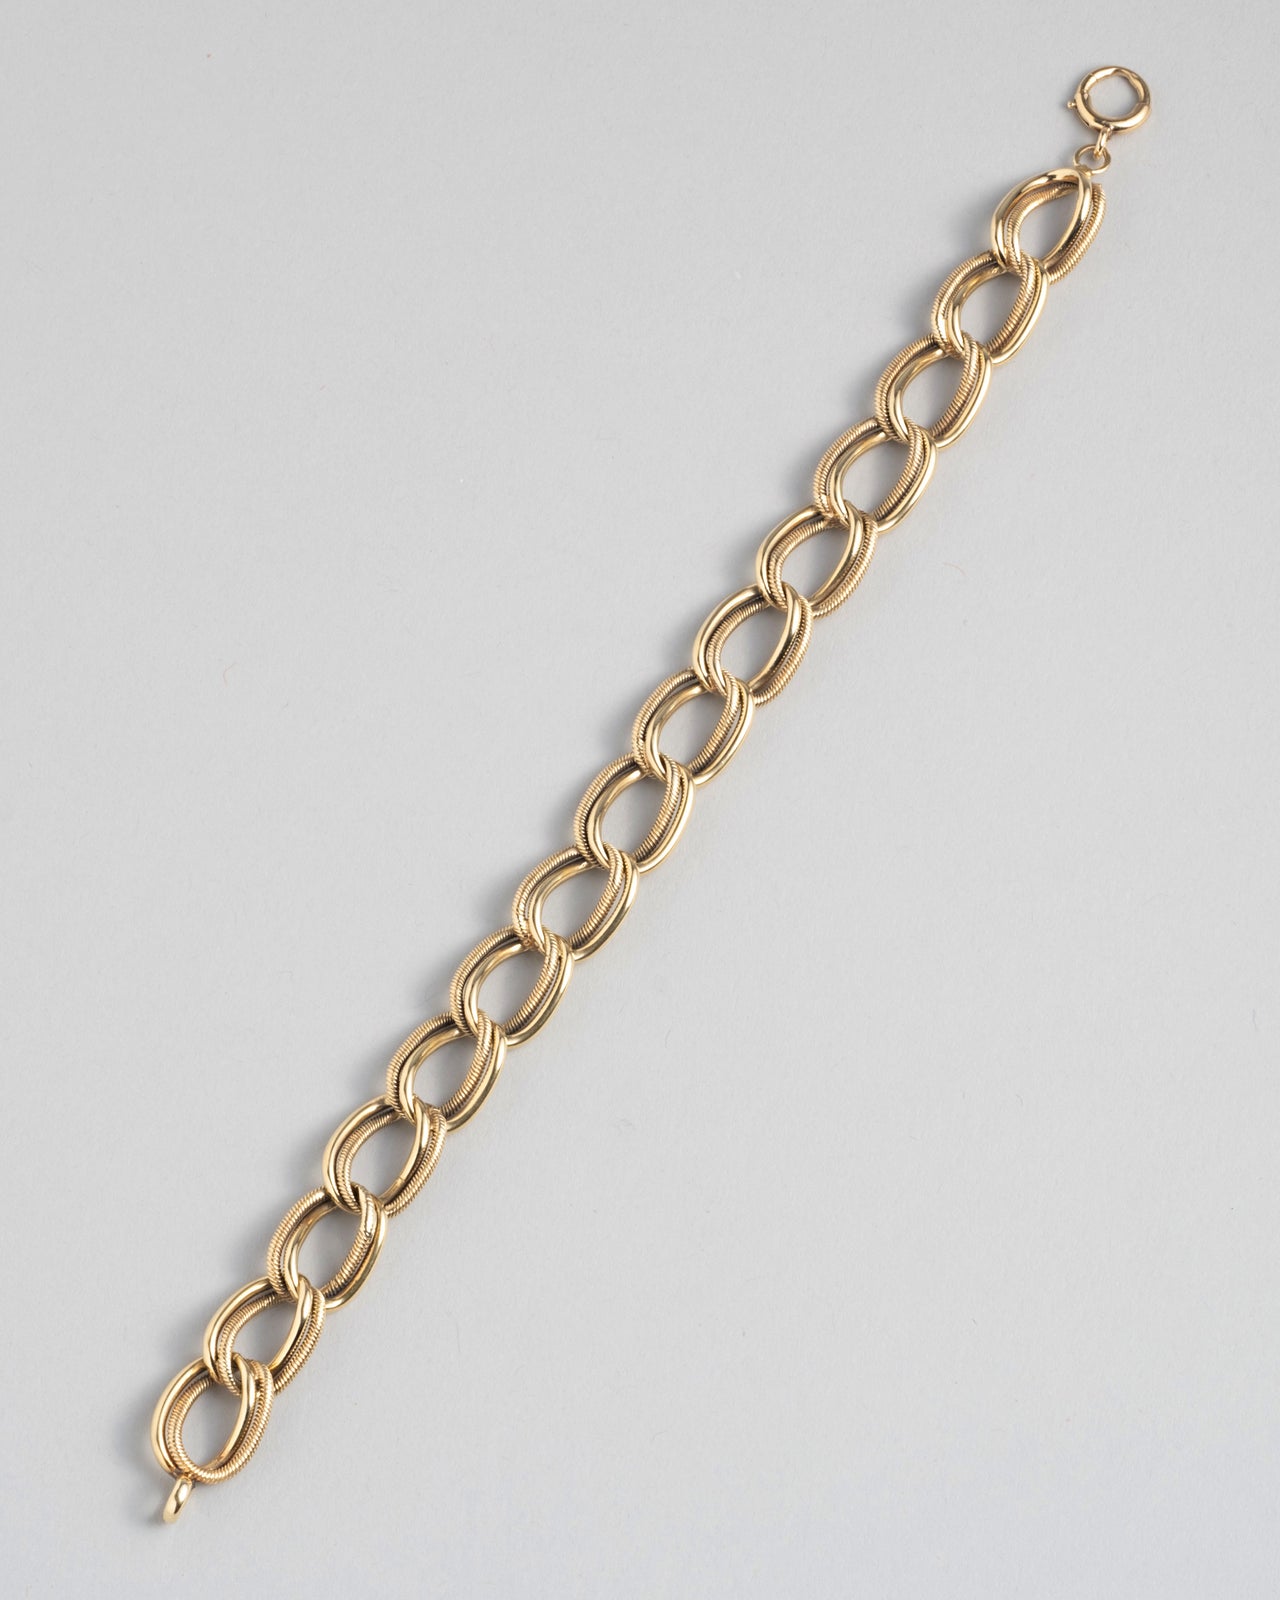 Antique Early 1900s 14k Gold Link Bracelet - Photo 2